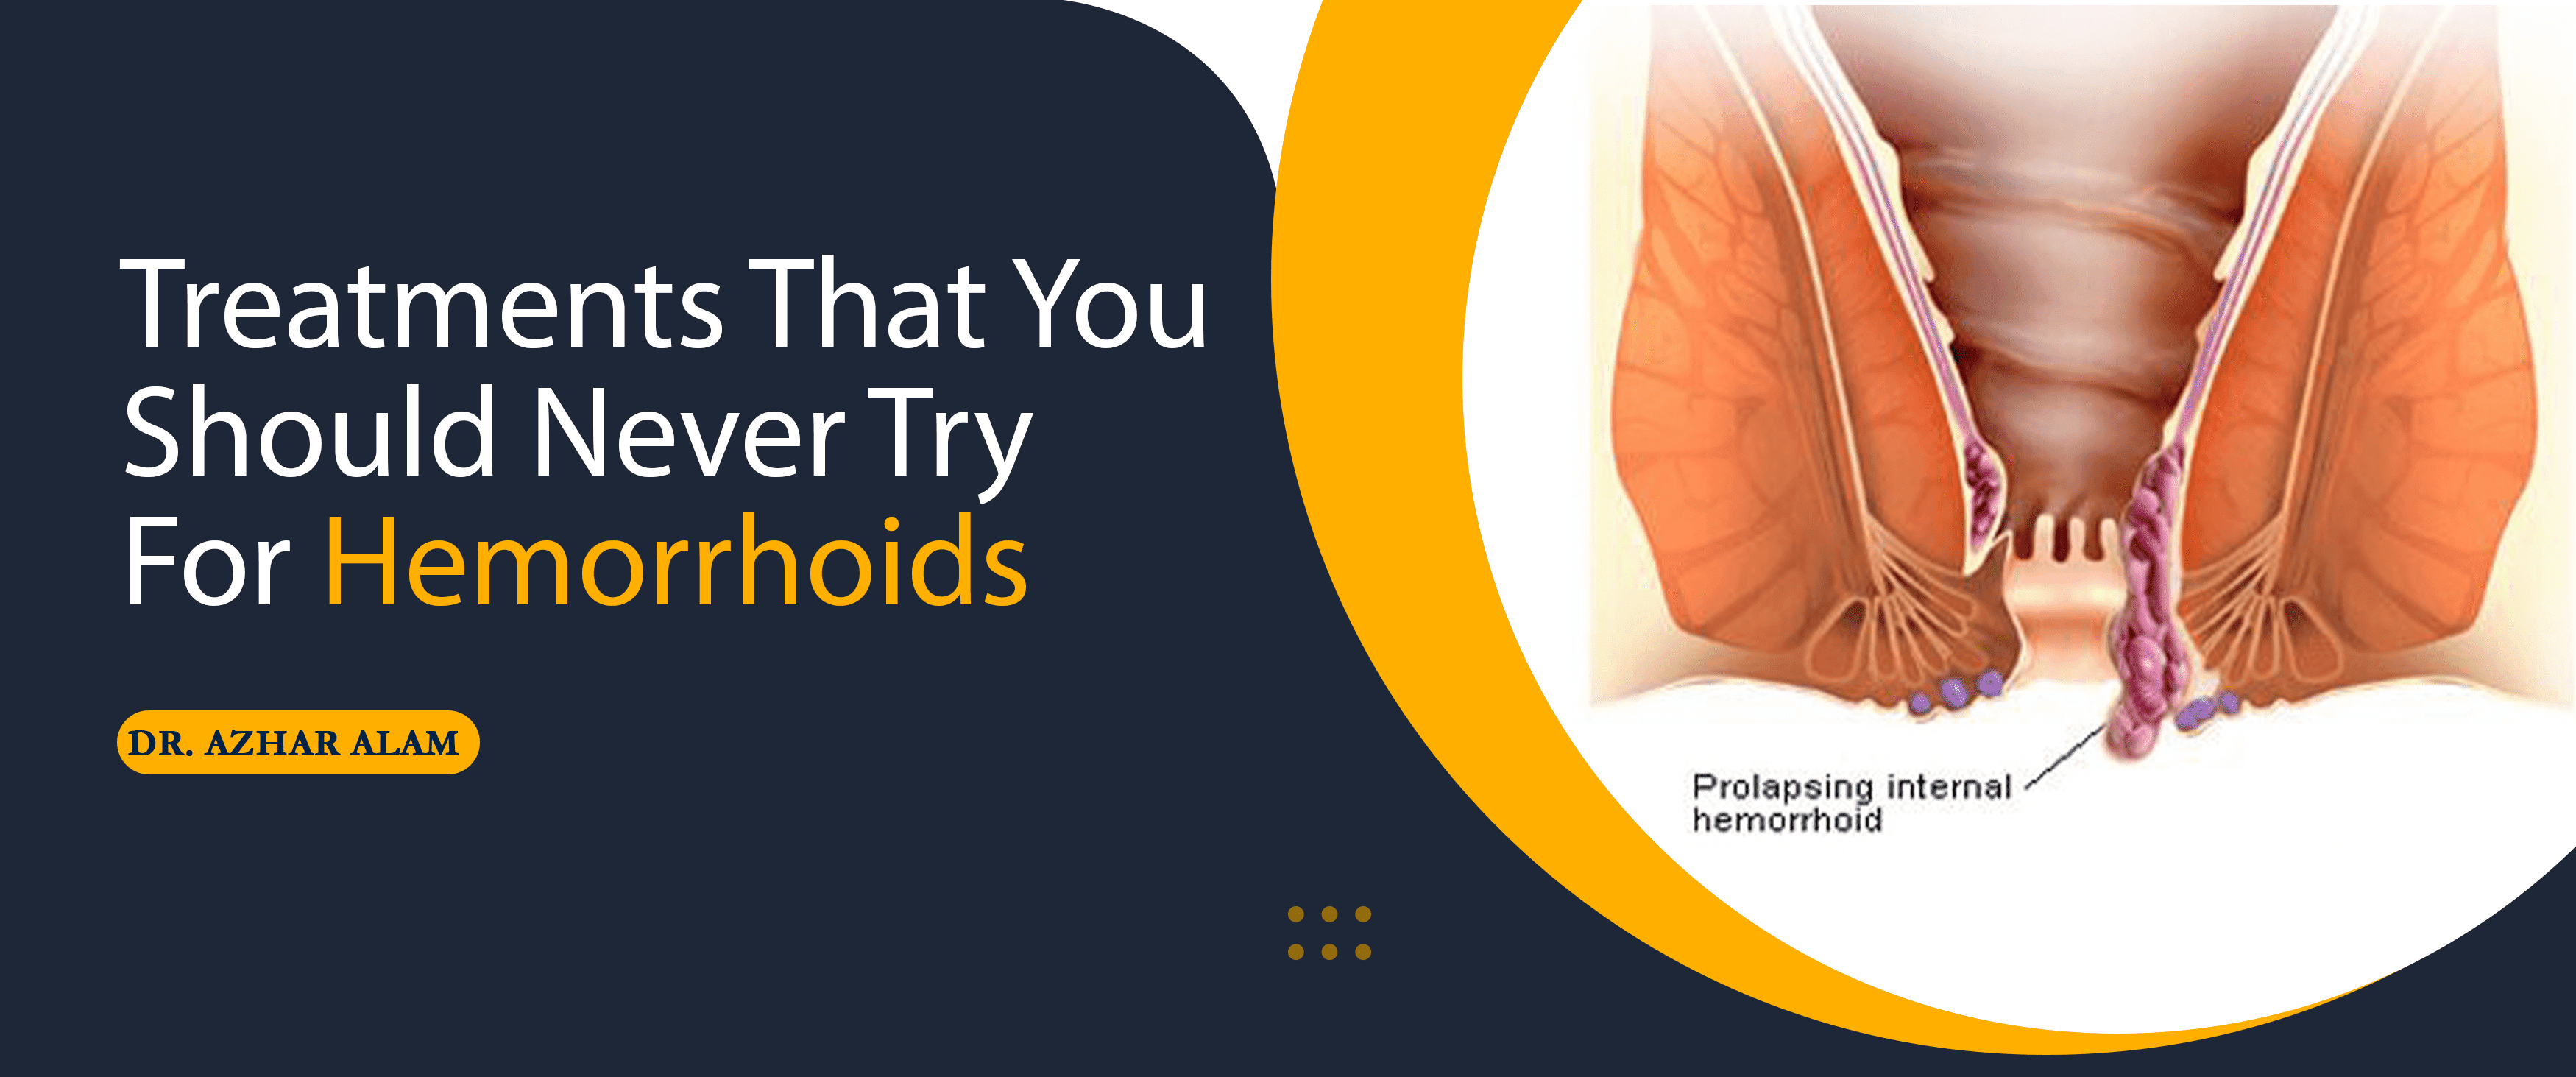 Hemorrhoids Treatments